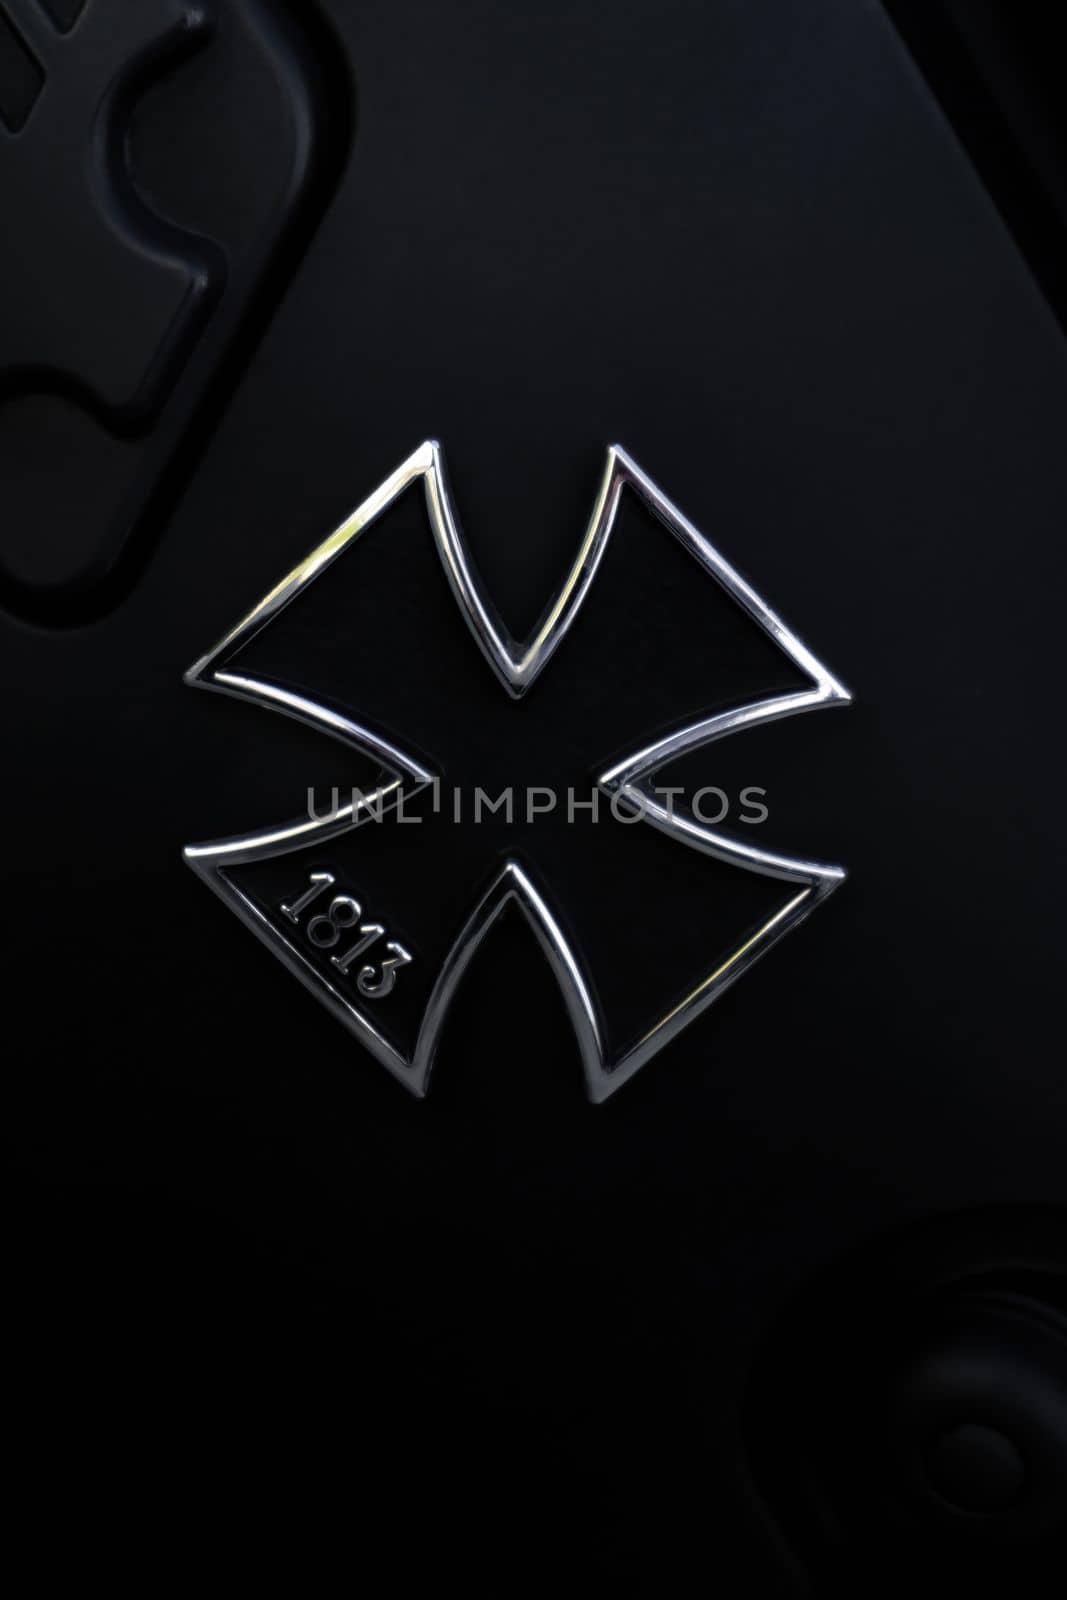 Metallic black German Maltese cross on the black matte tank of the motorcycle close up